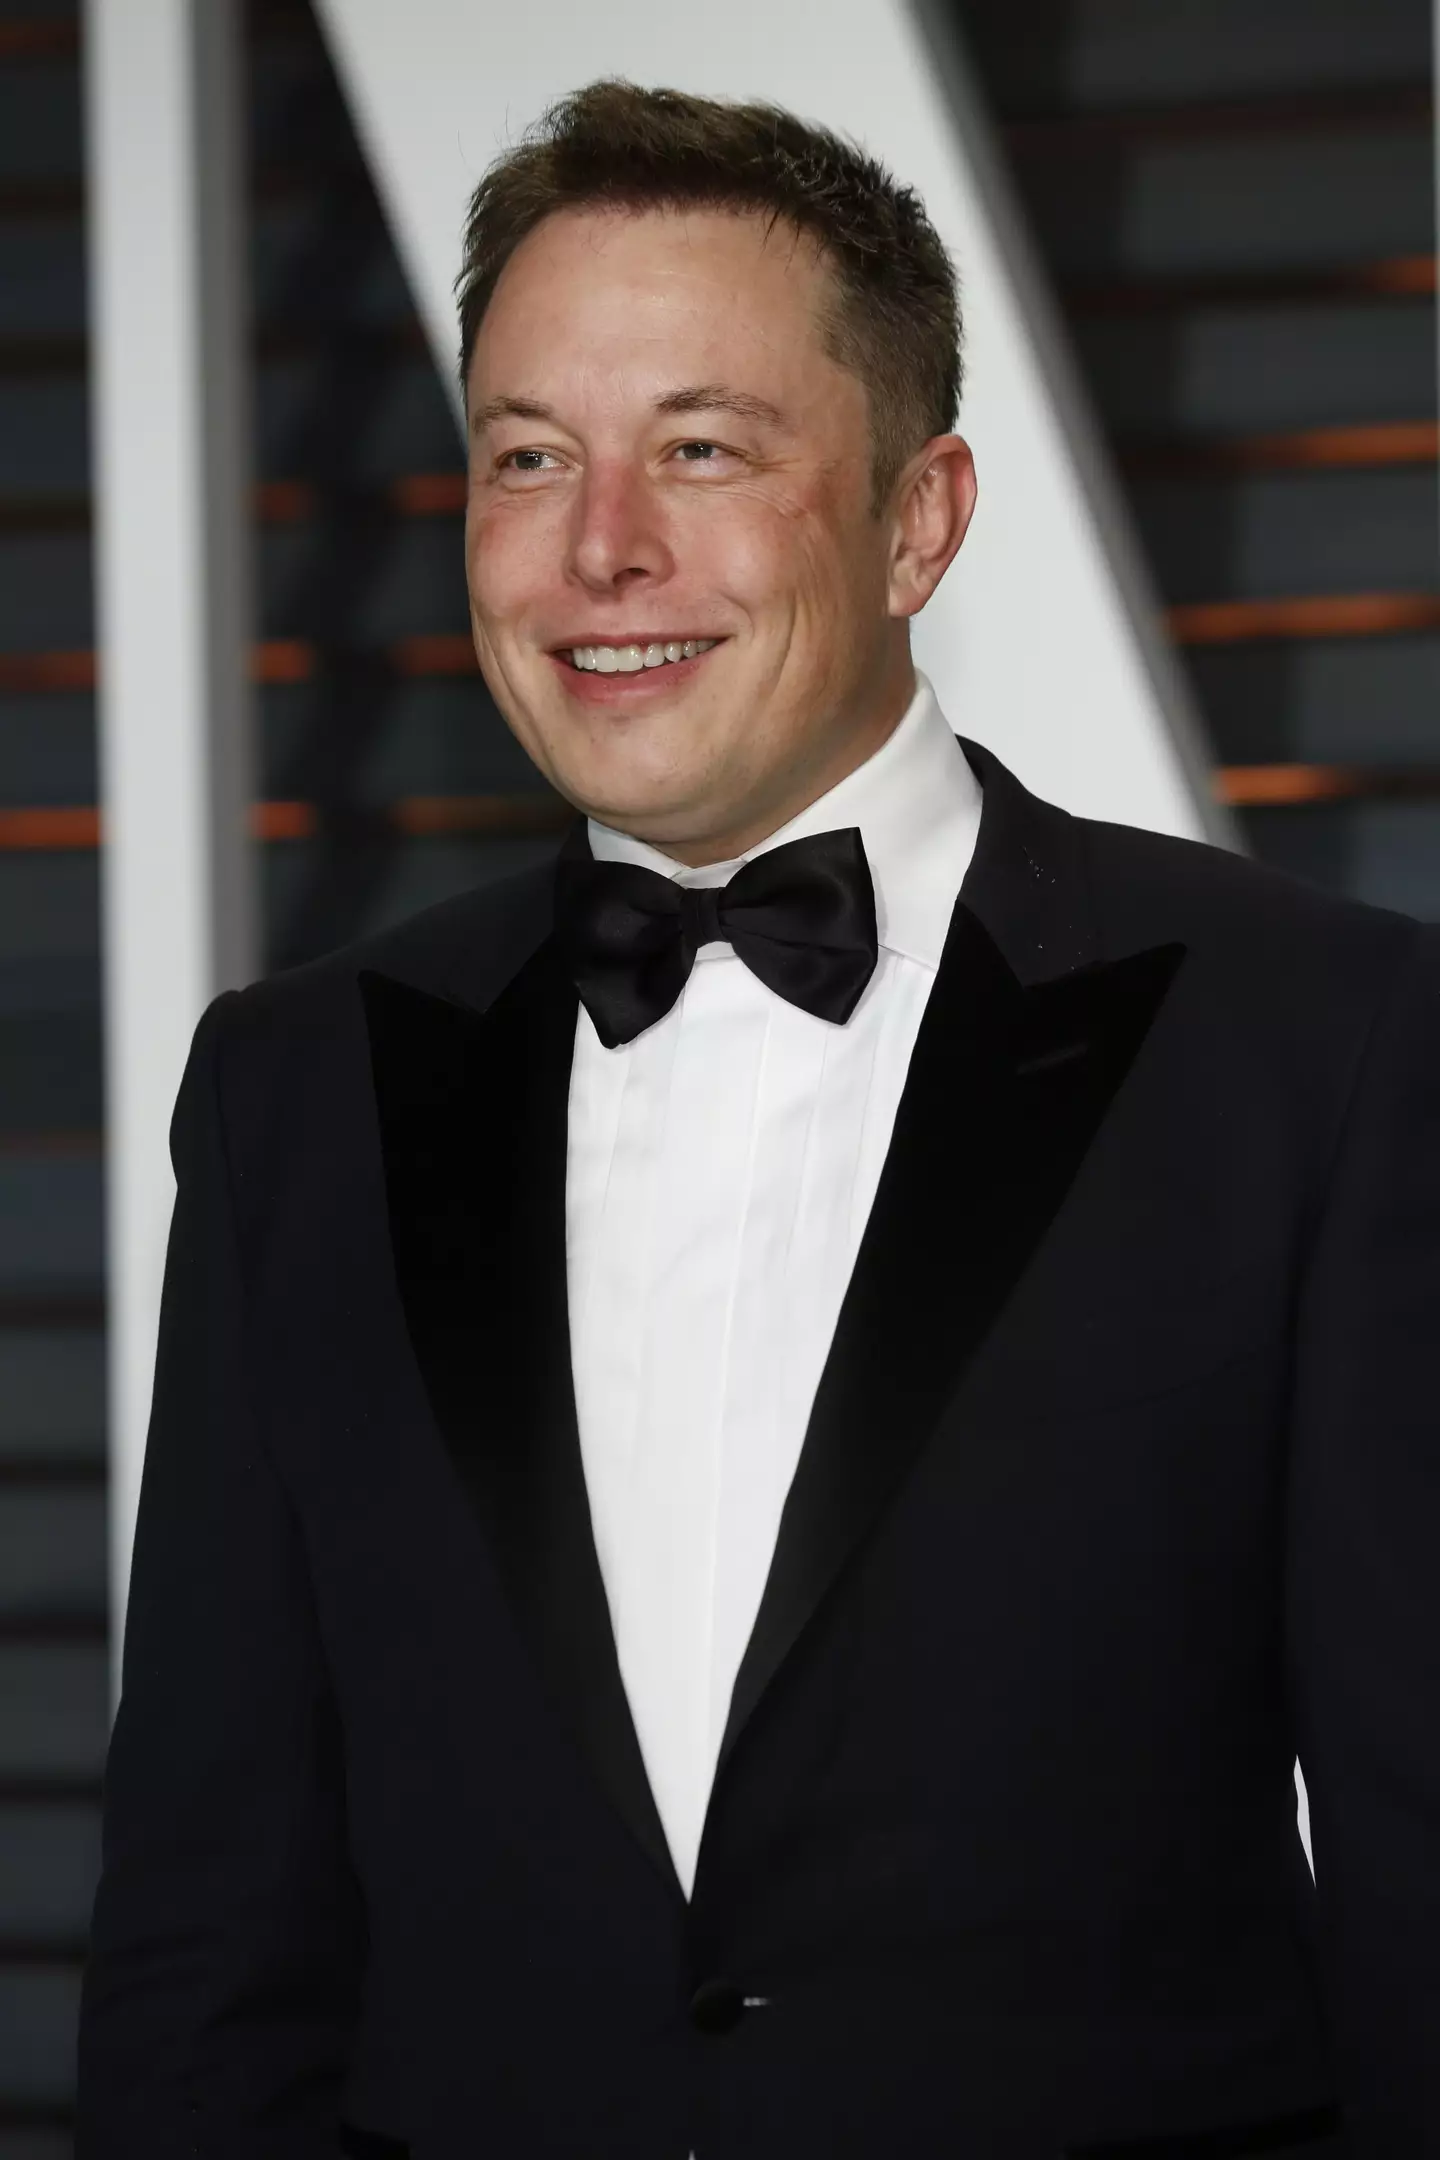 Elon Musk has said Tesla is losing billions of dollars.